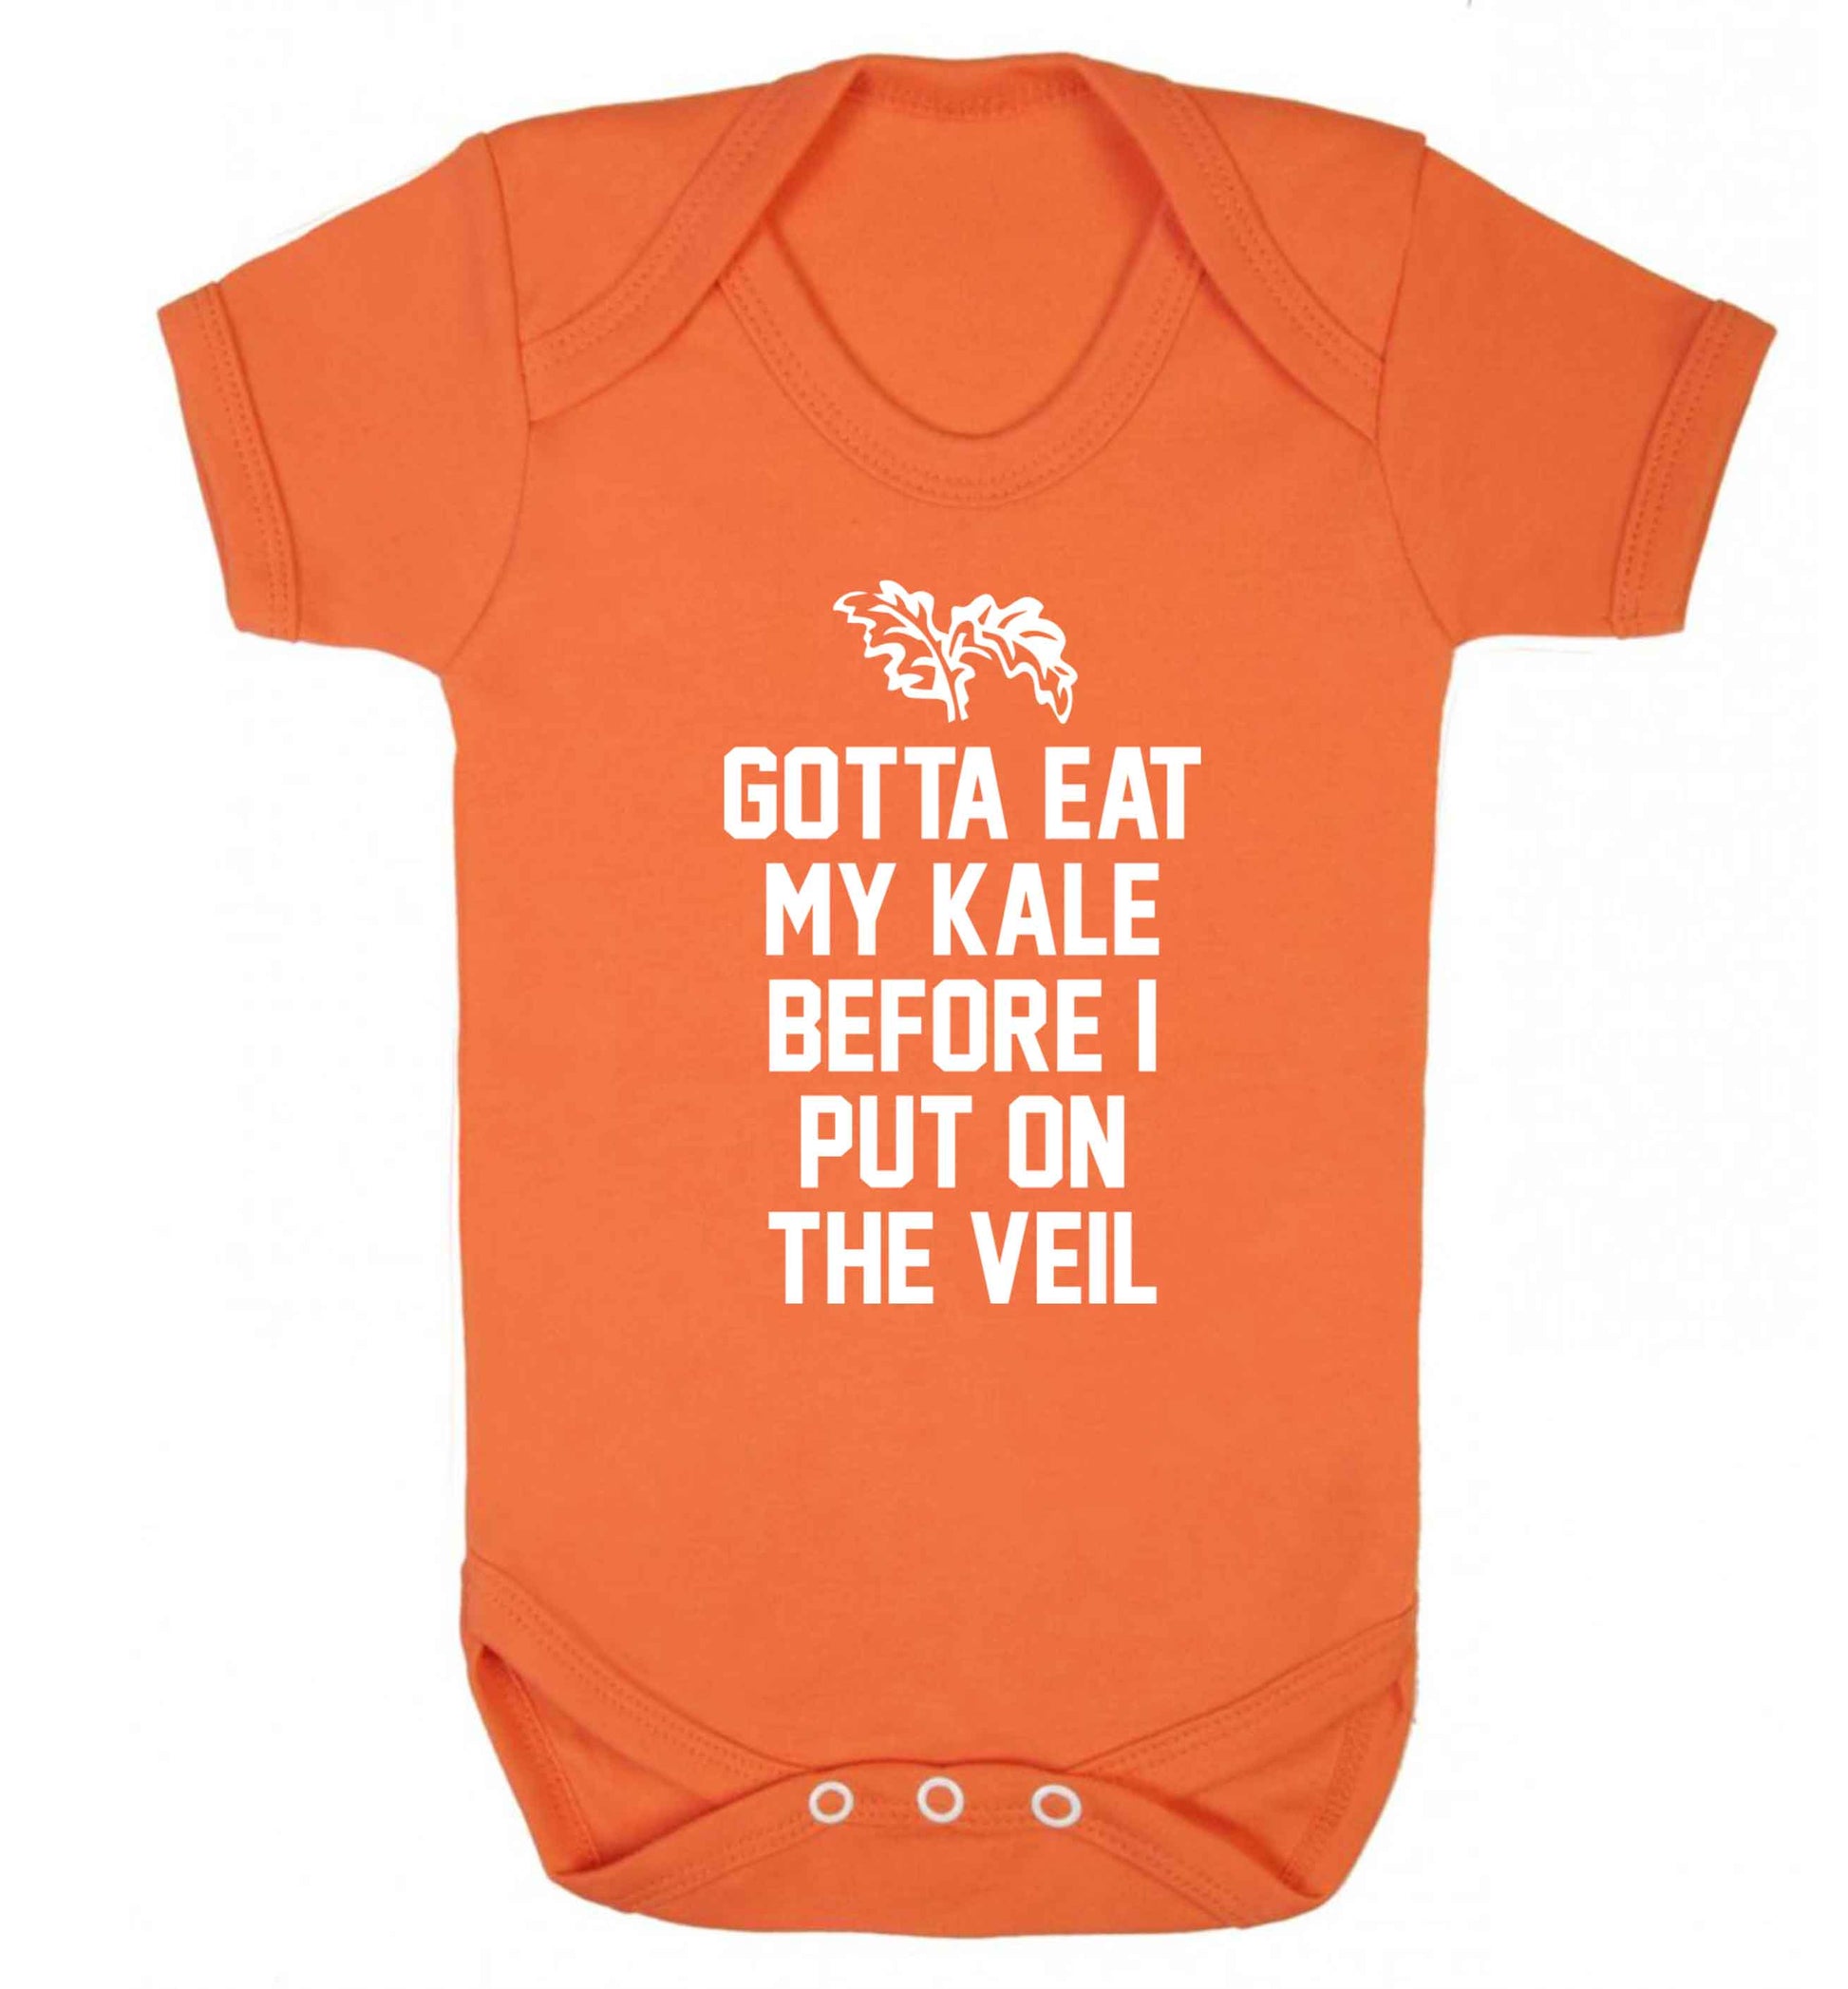 Gotta eat my kale before I put on the veil Baby Vest orange 18-24 months